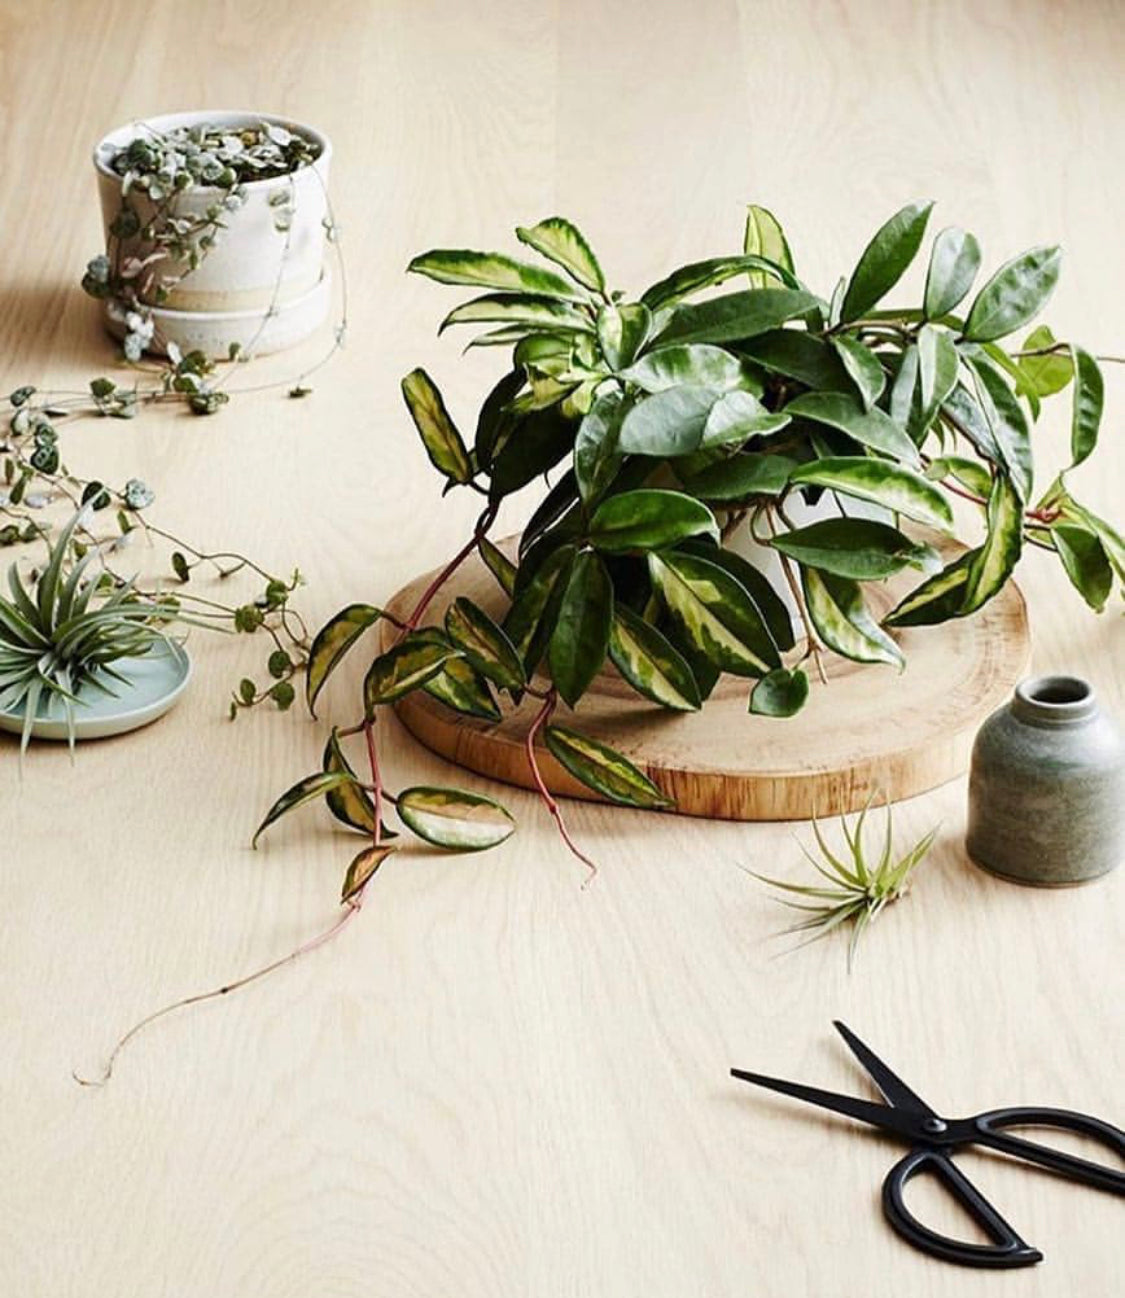 Plant Style by Alana Langan and Jacqui Vidal